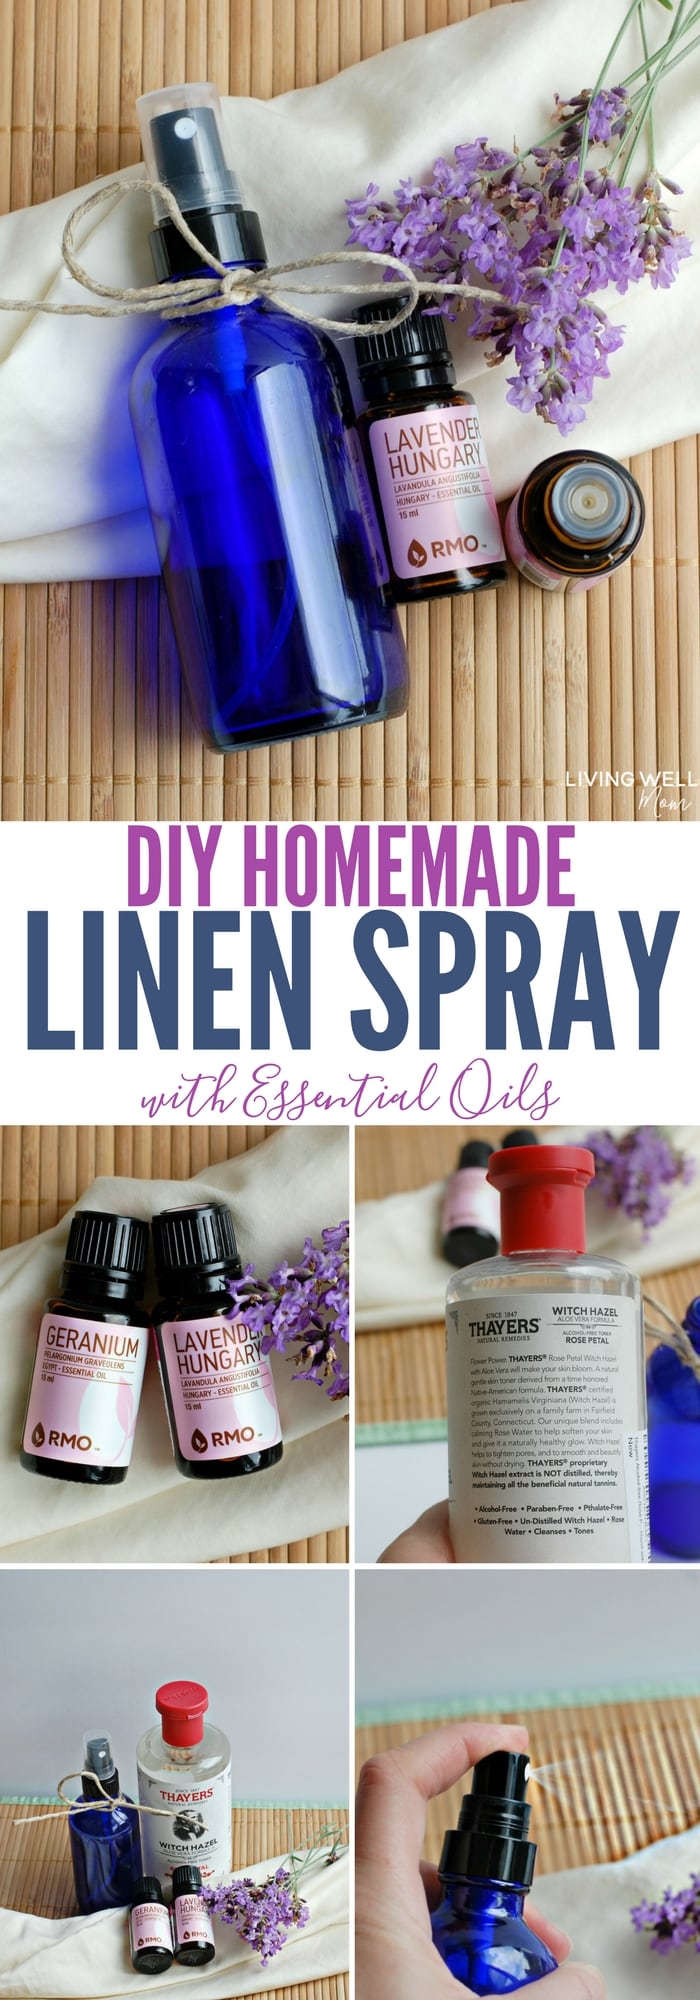 DIY Homemade Linen Spray with Essential